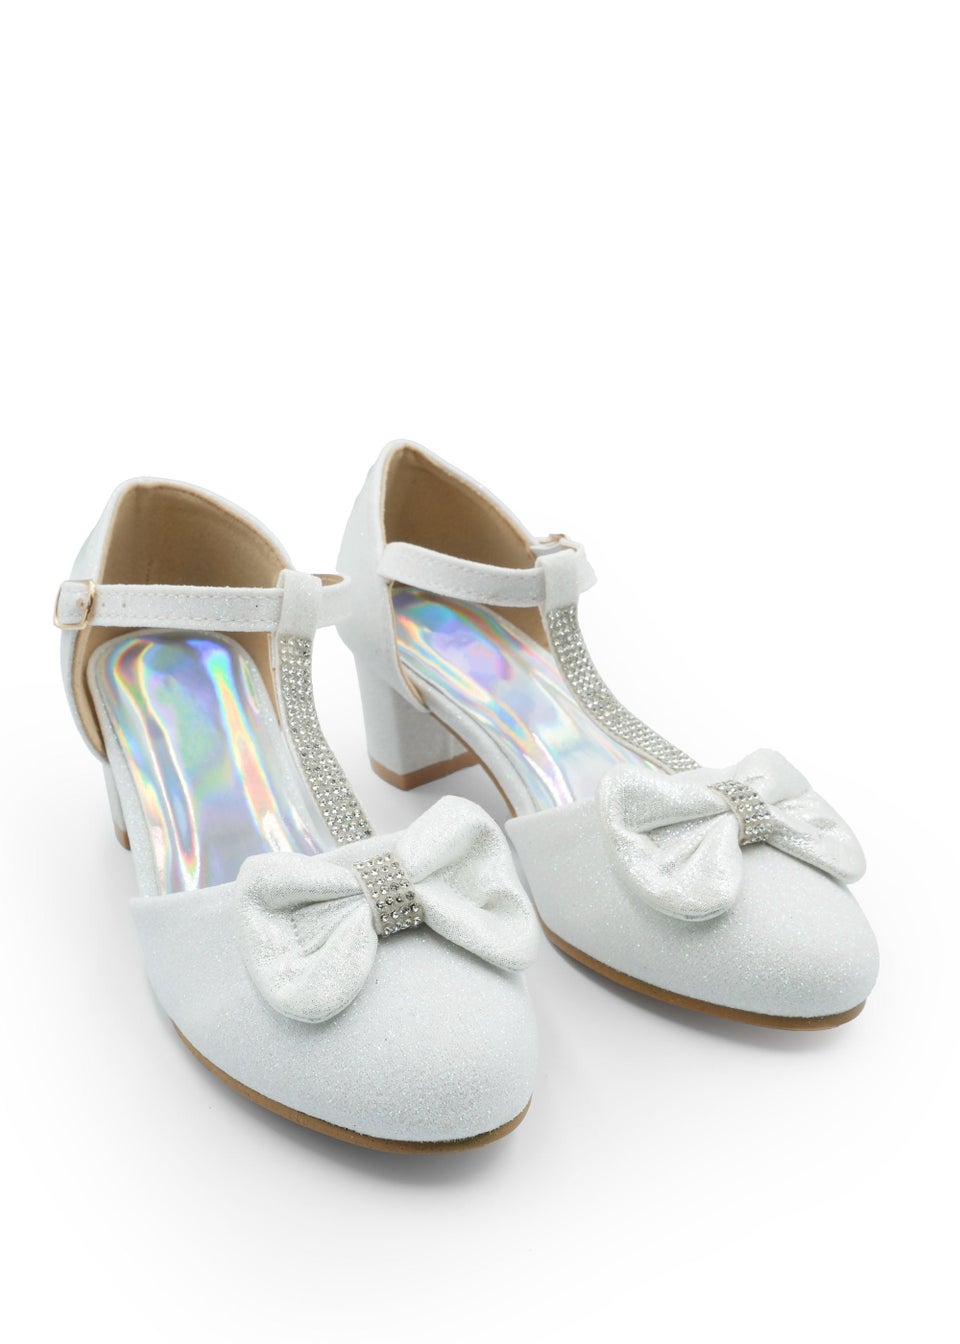 Where's That From White Glitter Chava Kids Mid Heel Sandals